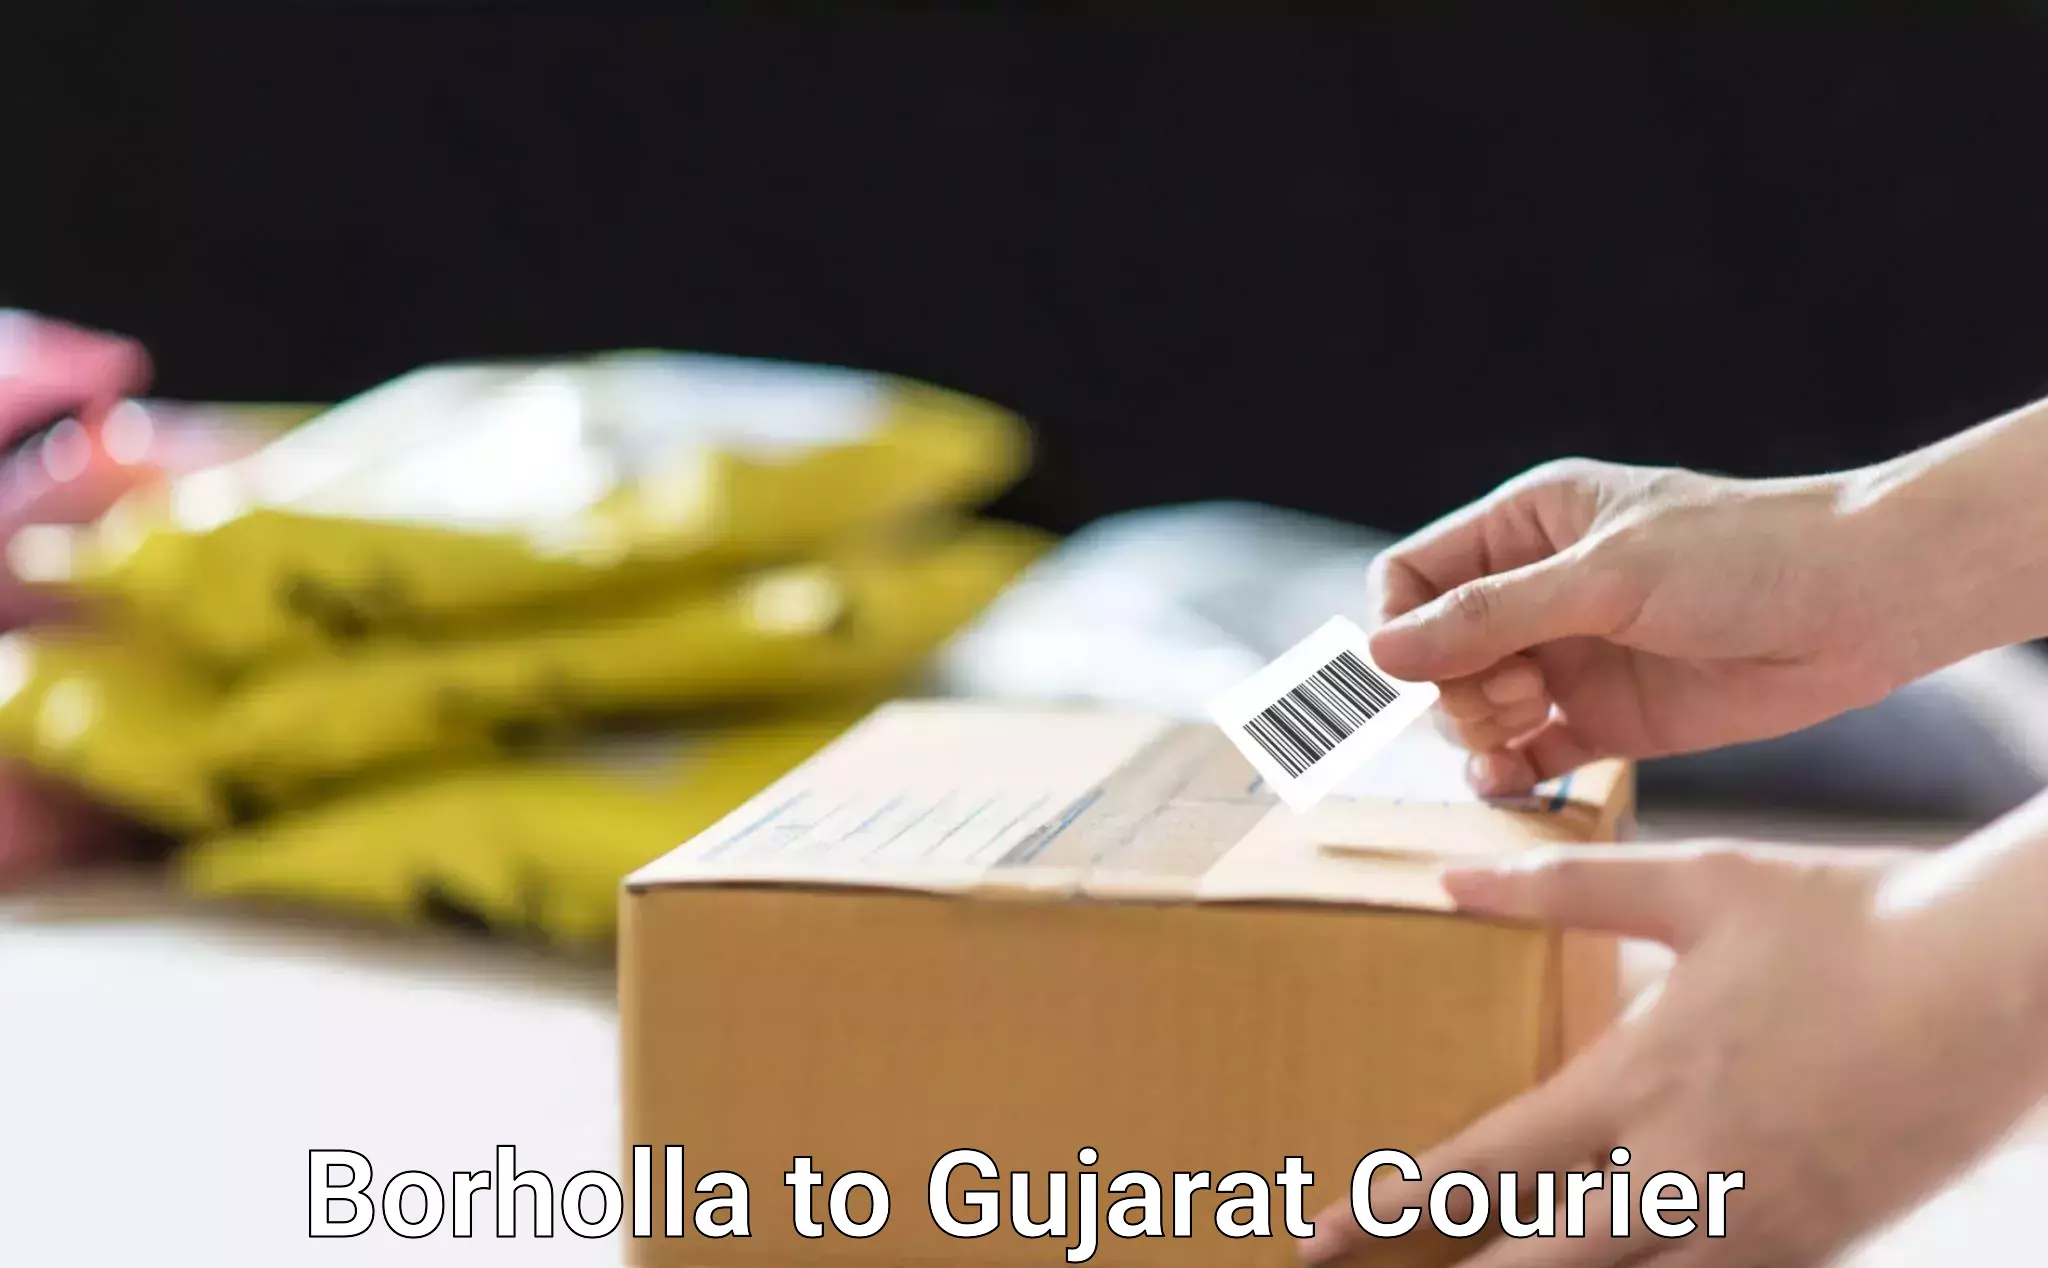 Courier service comparison Borholla to Gujarat